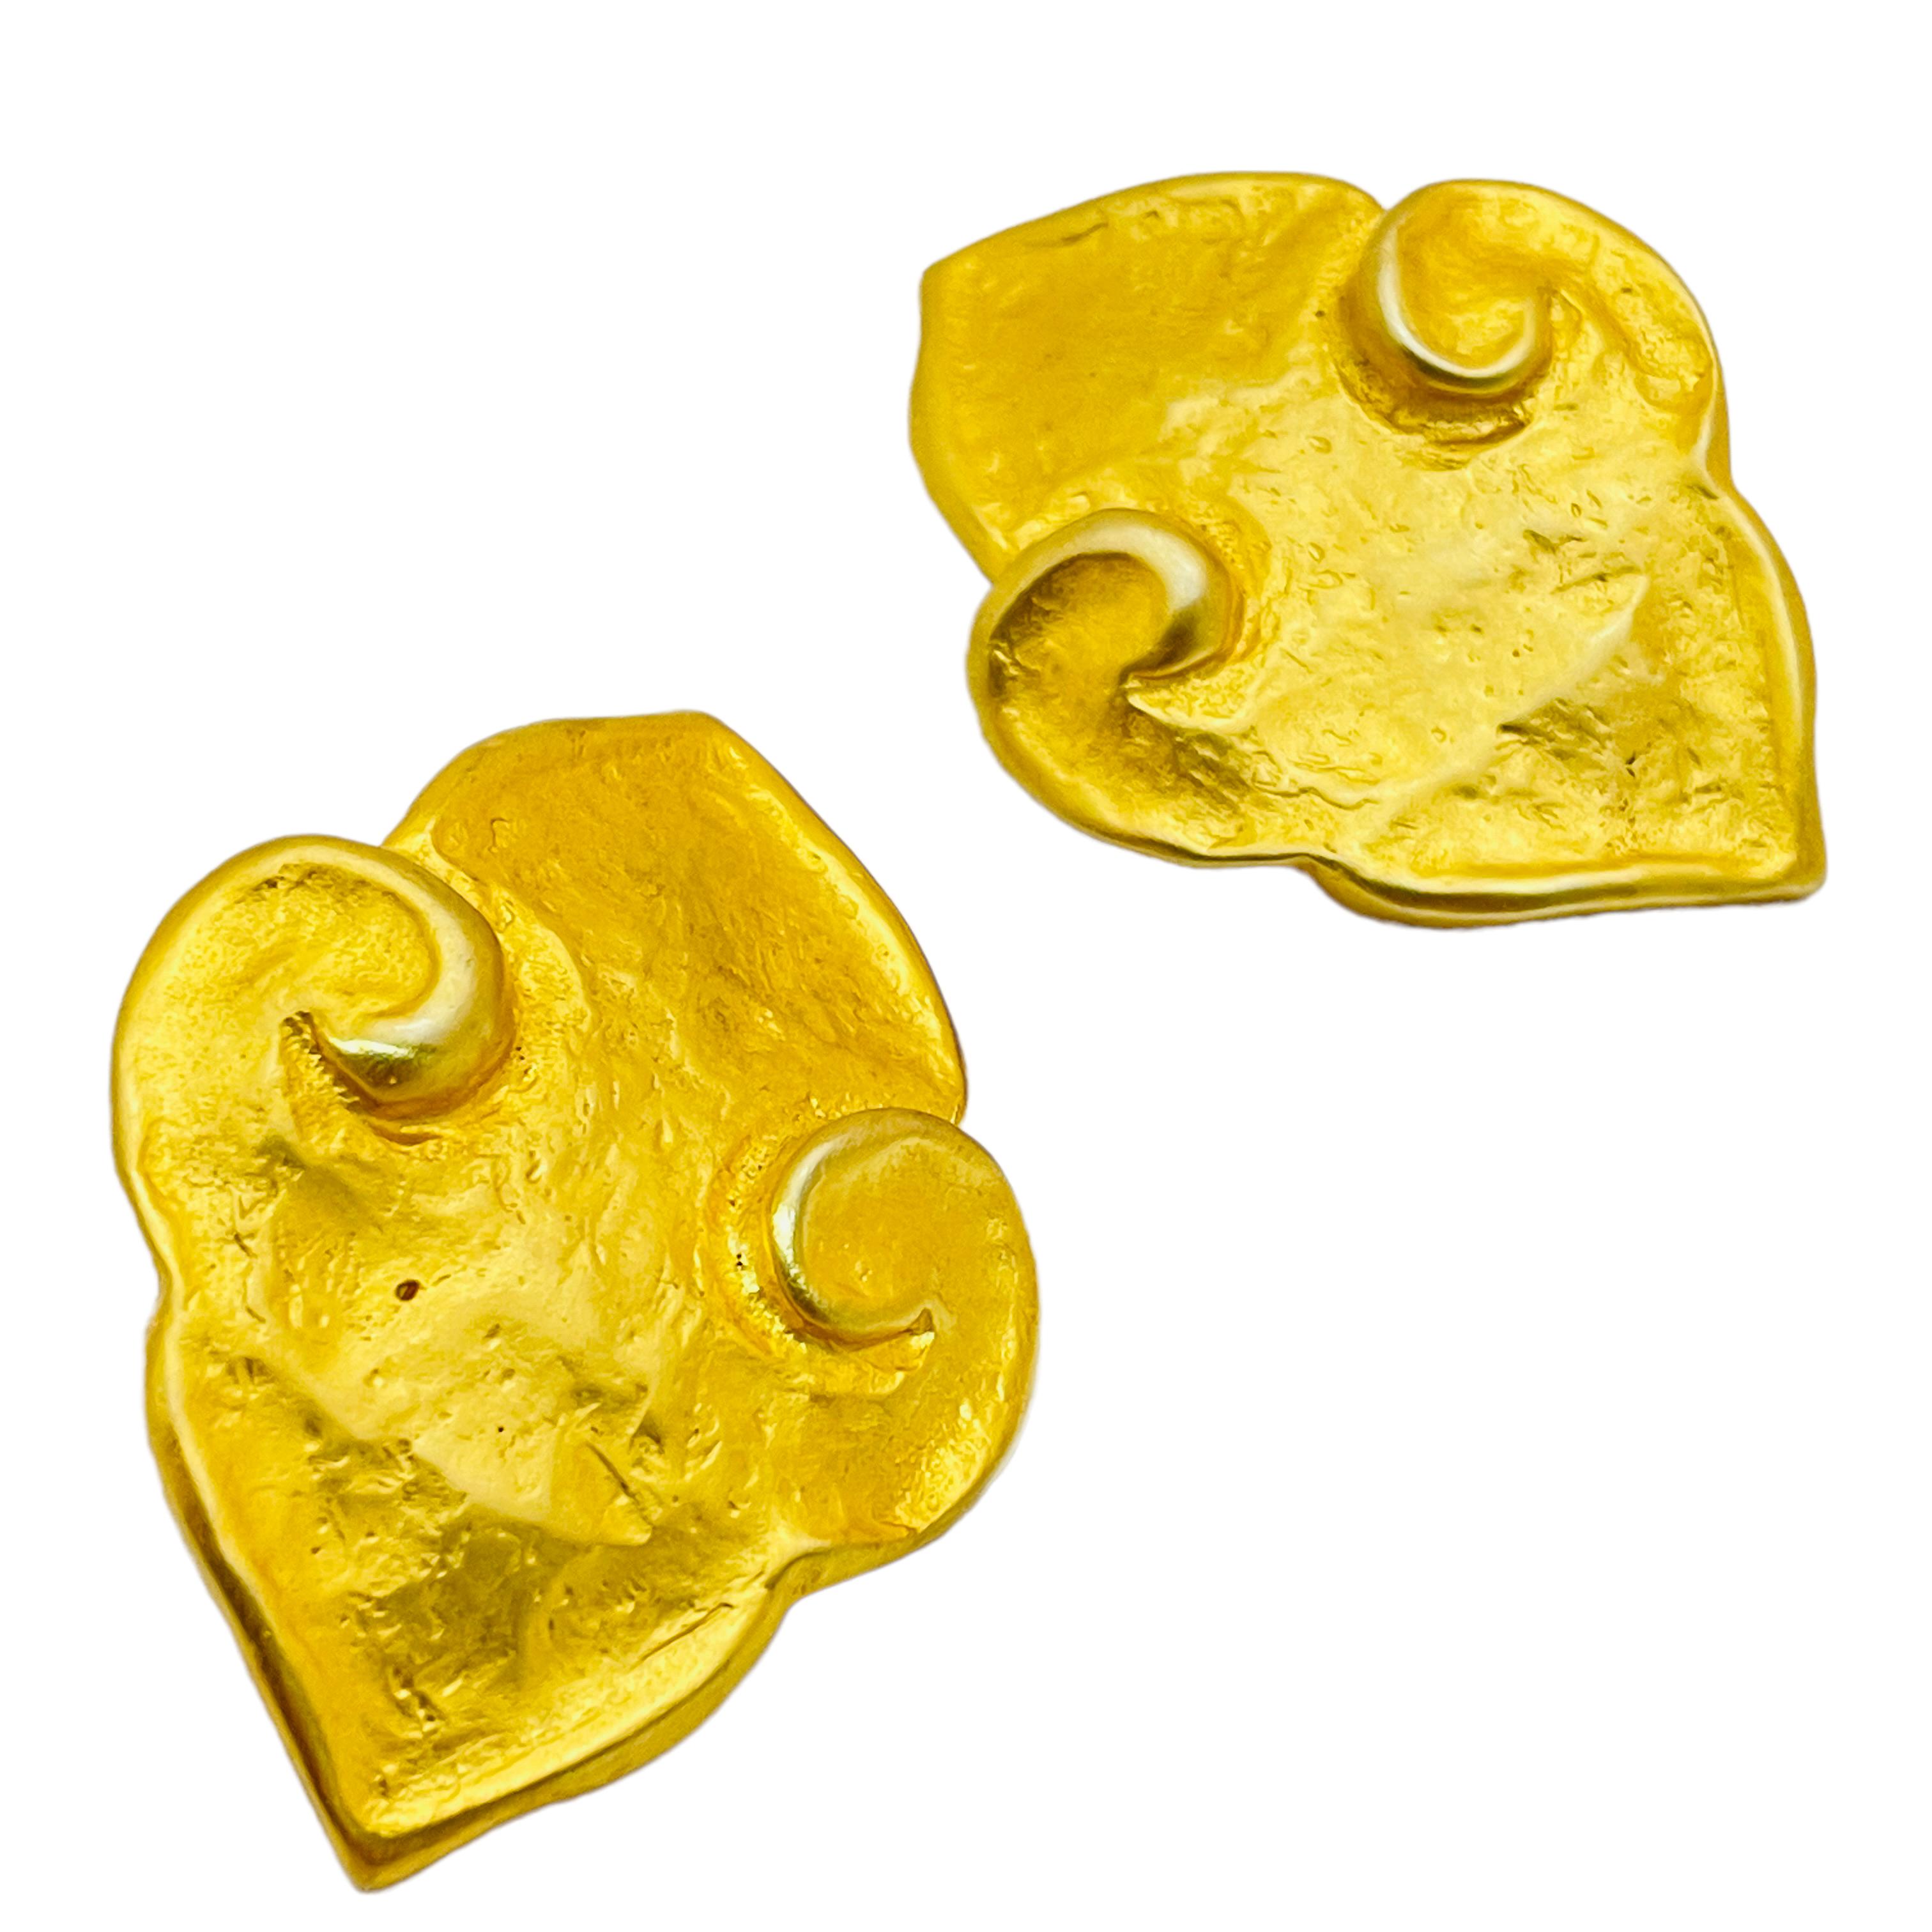 DETAILS

• unsigned 

• gold tone 

• vintage designer clip on earrings

MEASUREMENTS

• 1.75